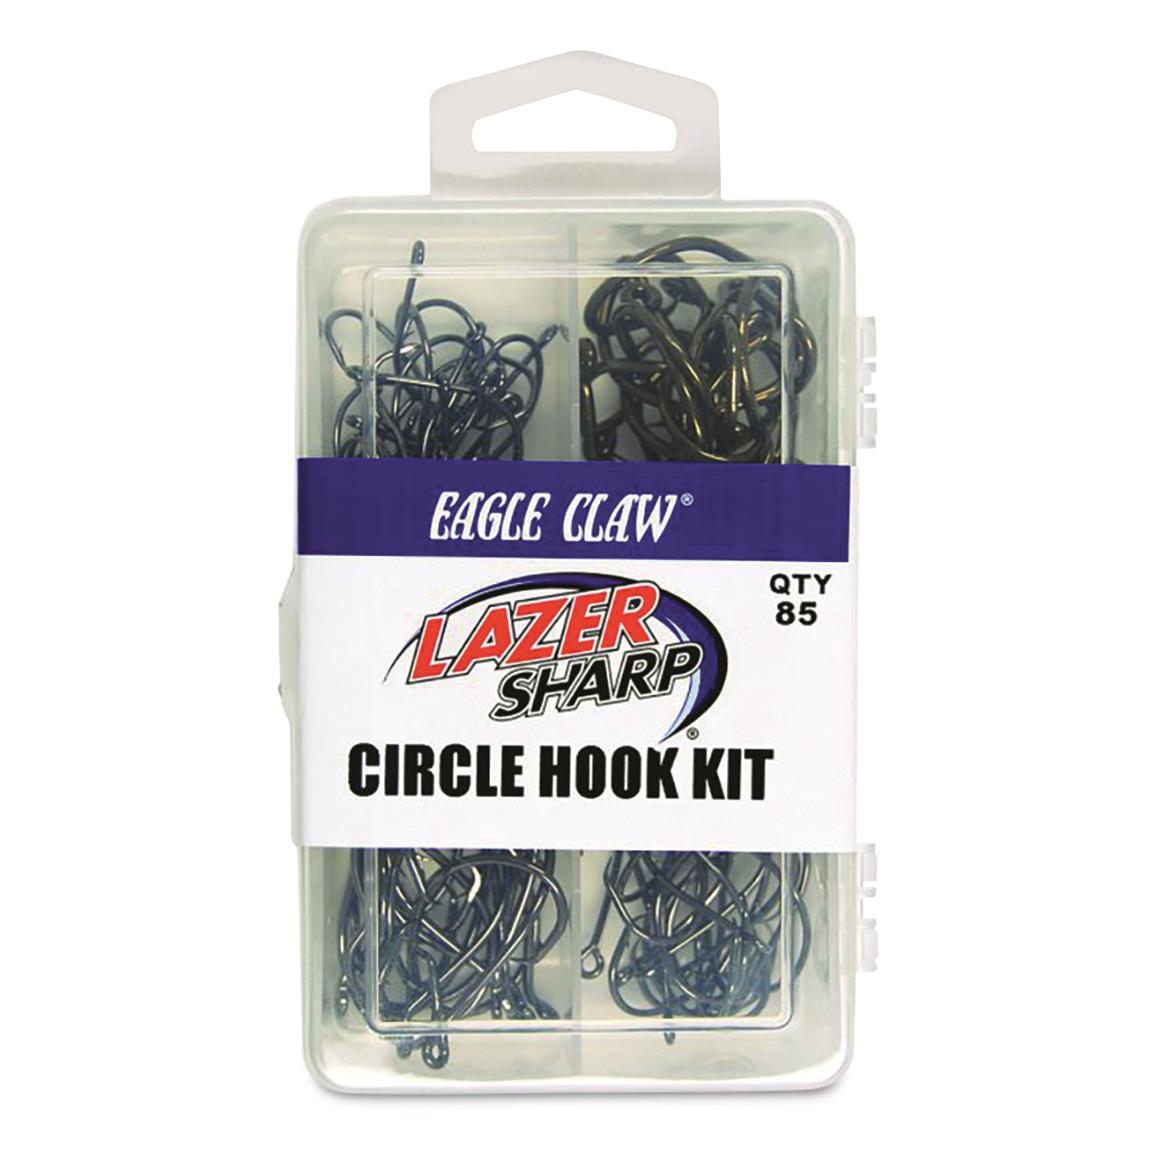 Eagle Claw Lazer Sharp Circle Hook Kit, 85 Pieces